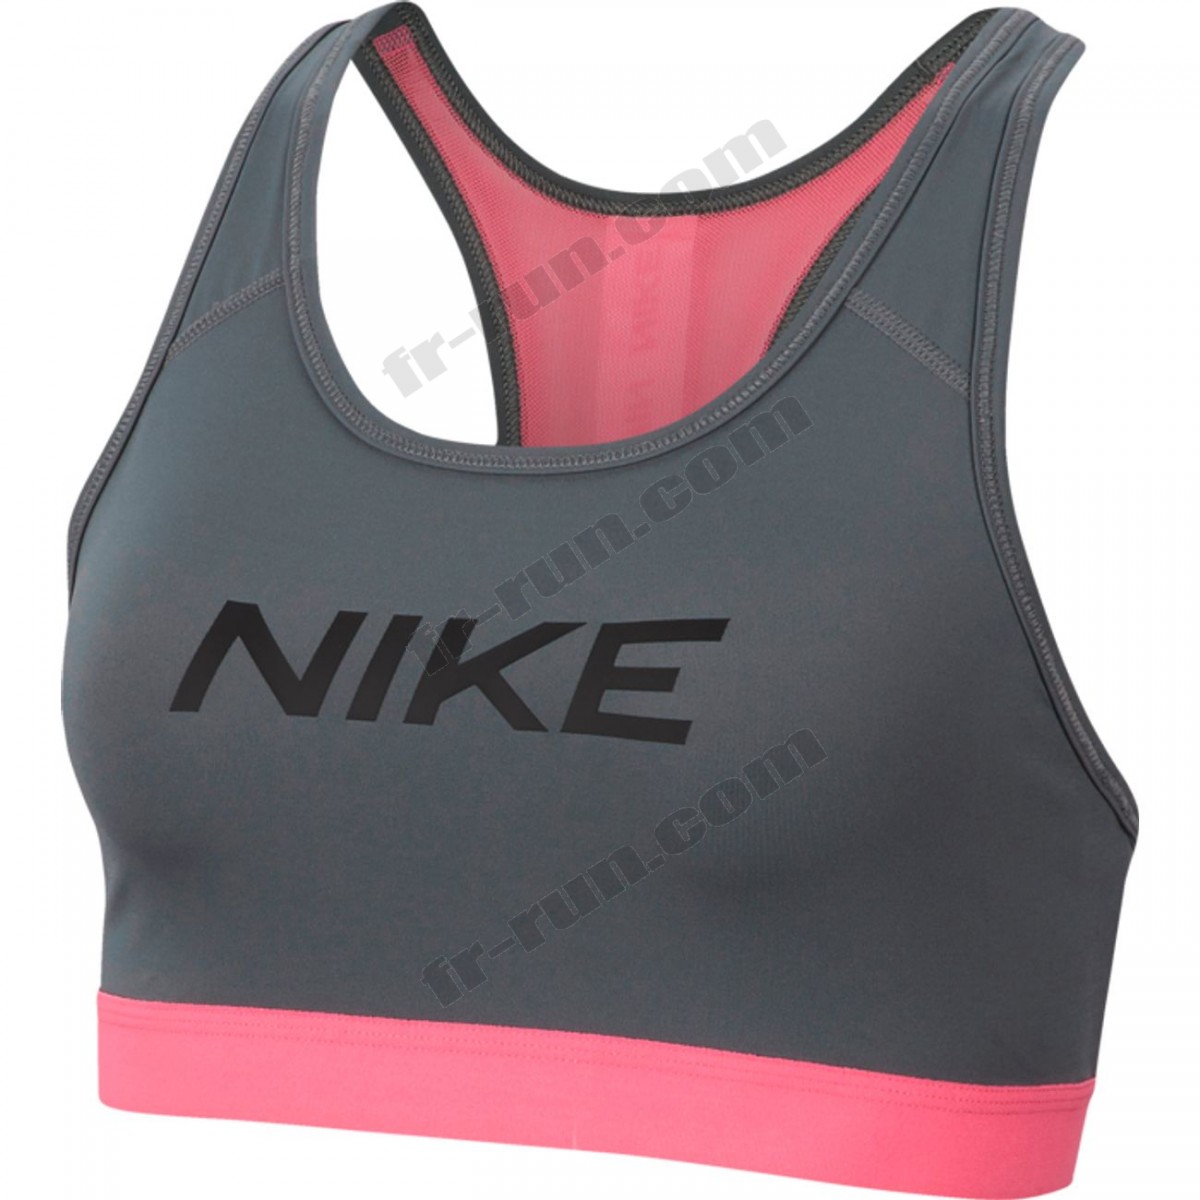 Nike/BRASSIERE Fitness femme NIKE MED BAND HBRGX NO PAD ◇◇◇ Pas Cher Du Tout - -0